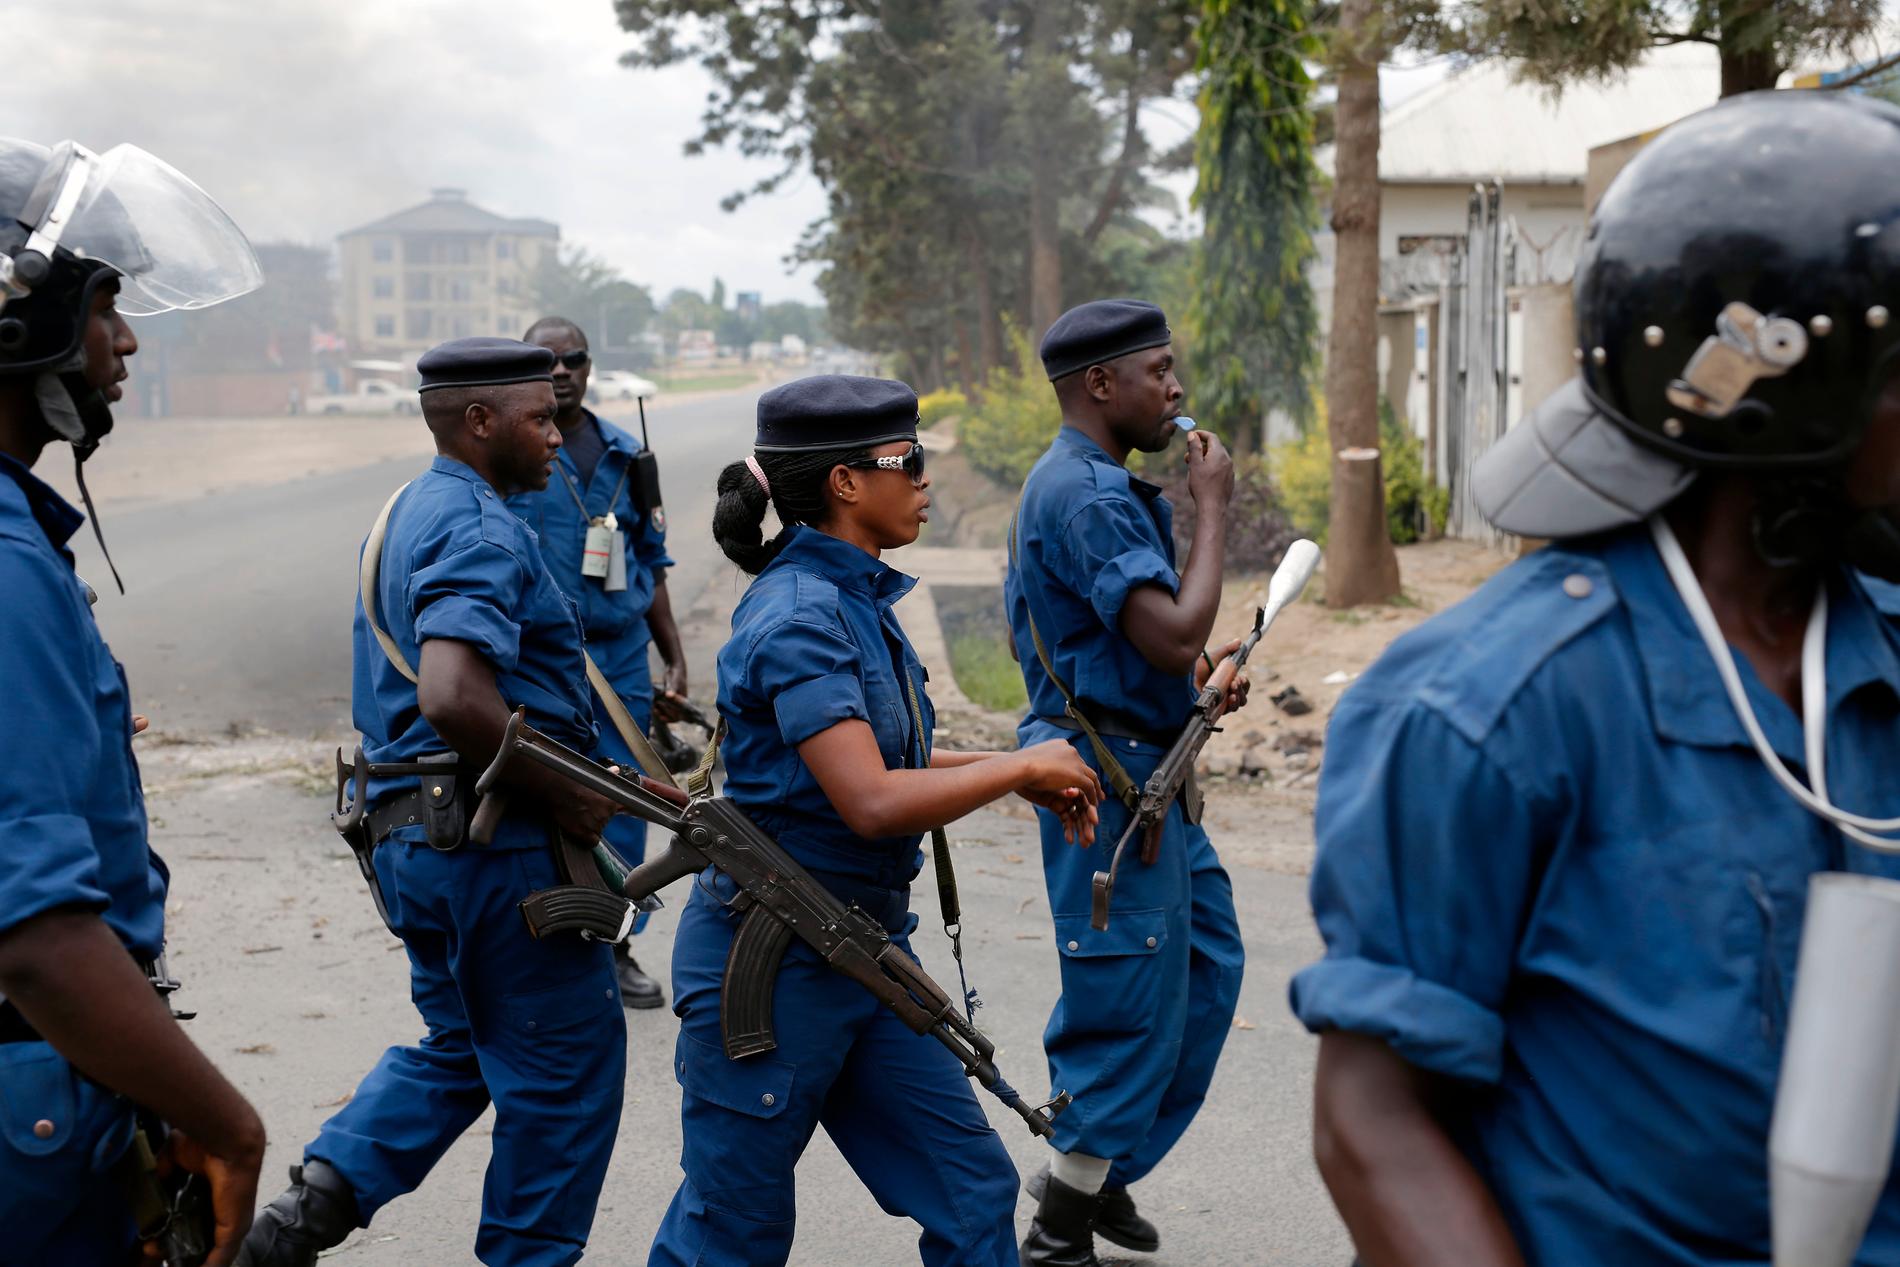 Polis sattes in mot omfattande demonstrationer som skakade landet 2015. Arkivbild.